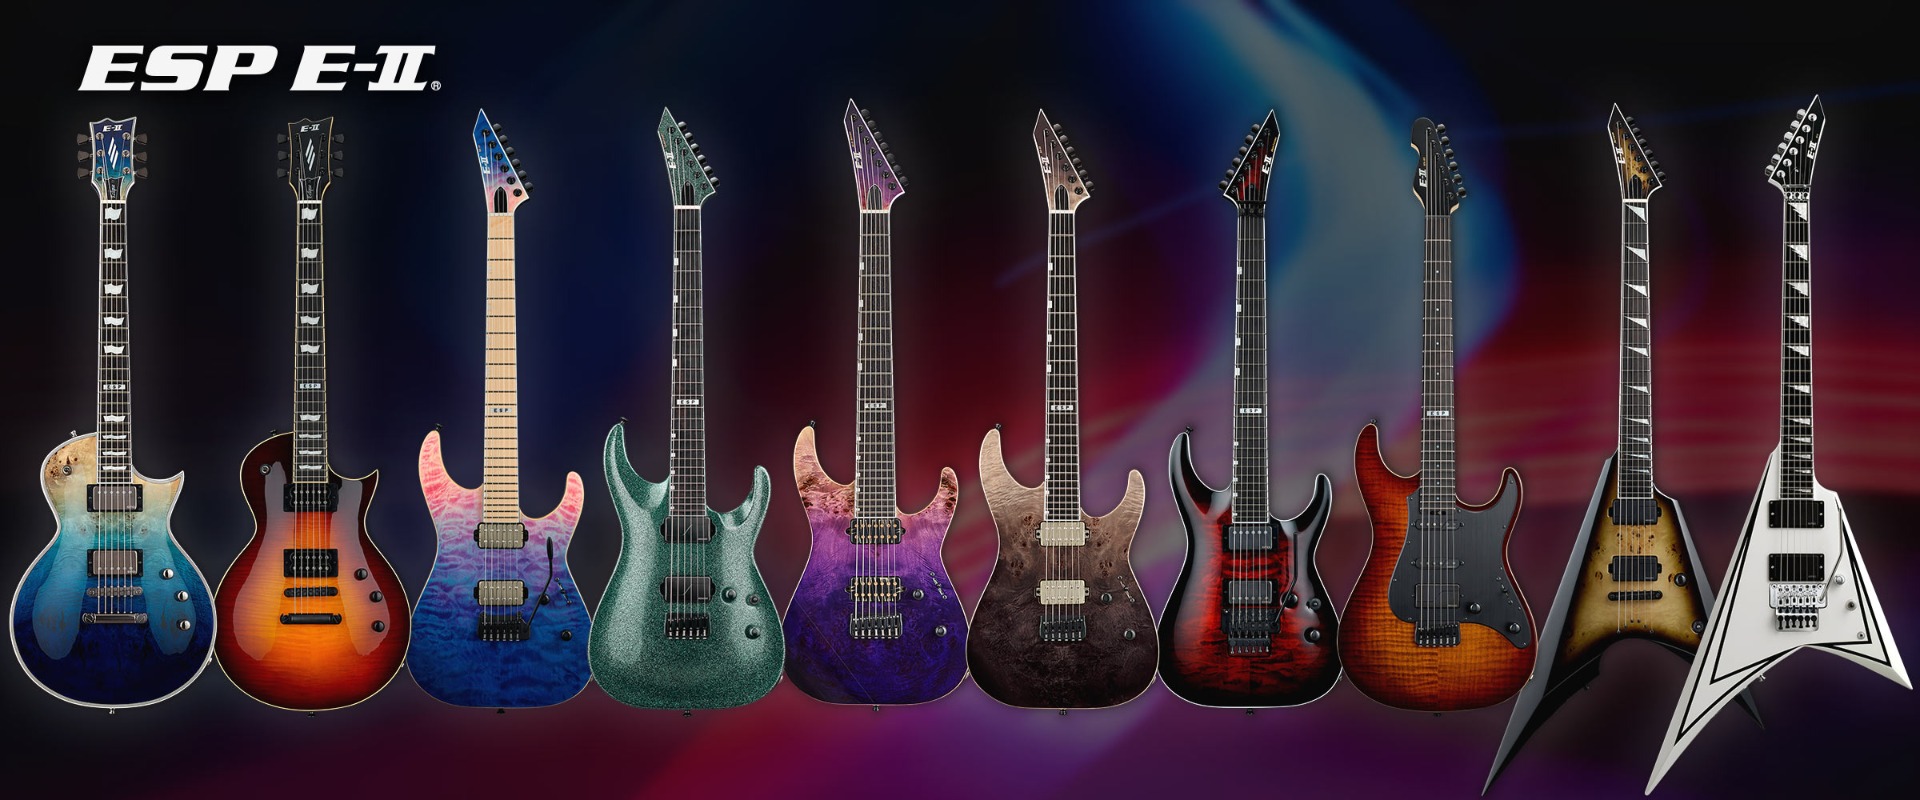 ESP E-II Guitars